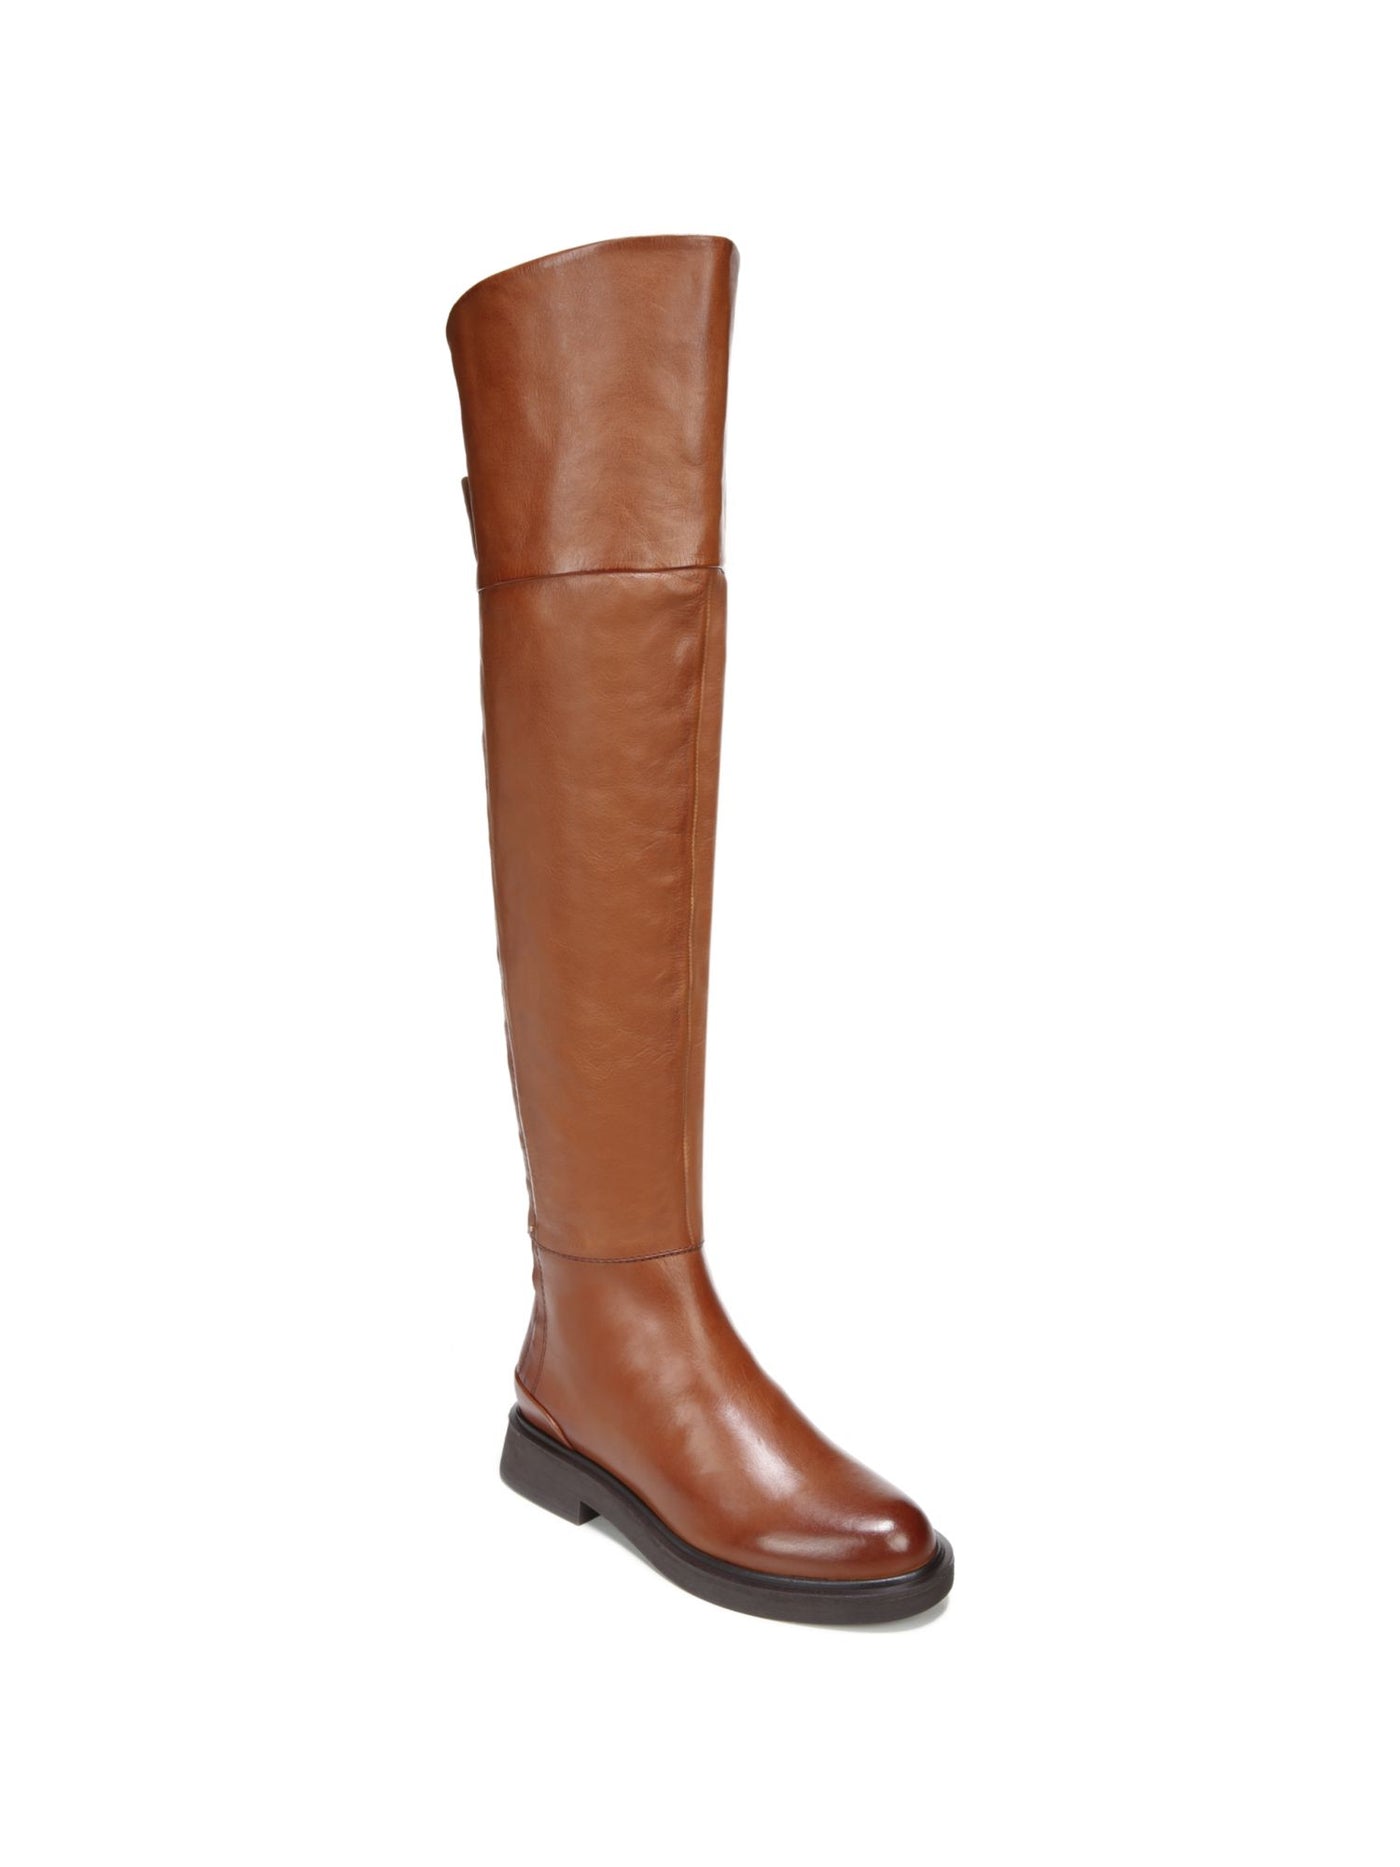 FRANCO SARTO Womens Brown Cushioned Battina Round Toe Block Heel Zip-Up Leather Riding Boot 7 M